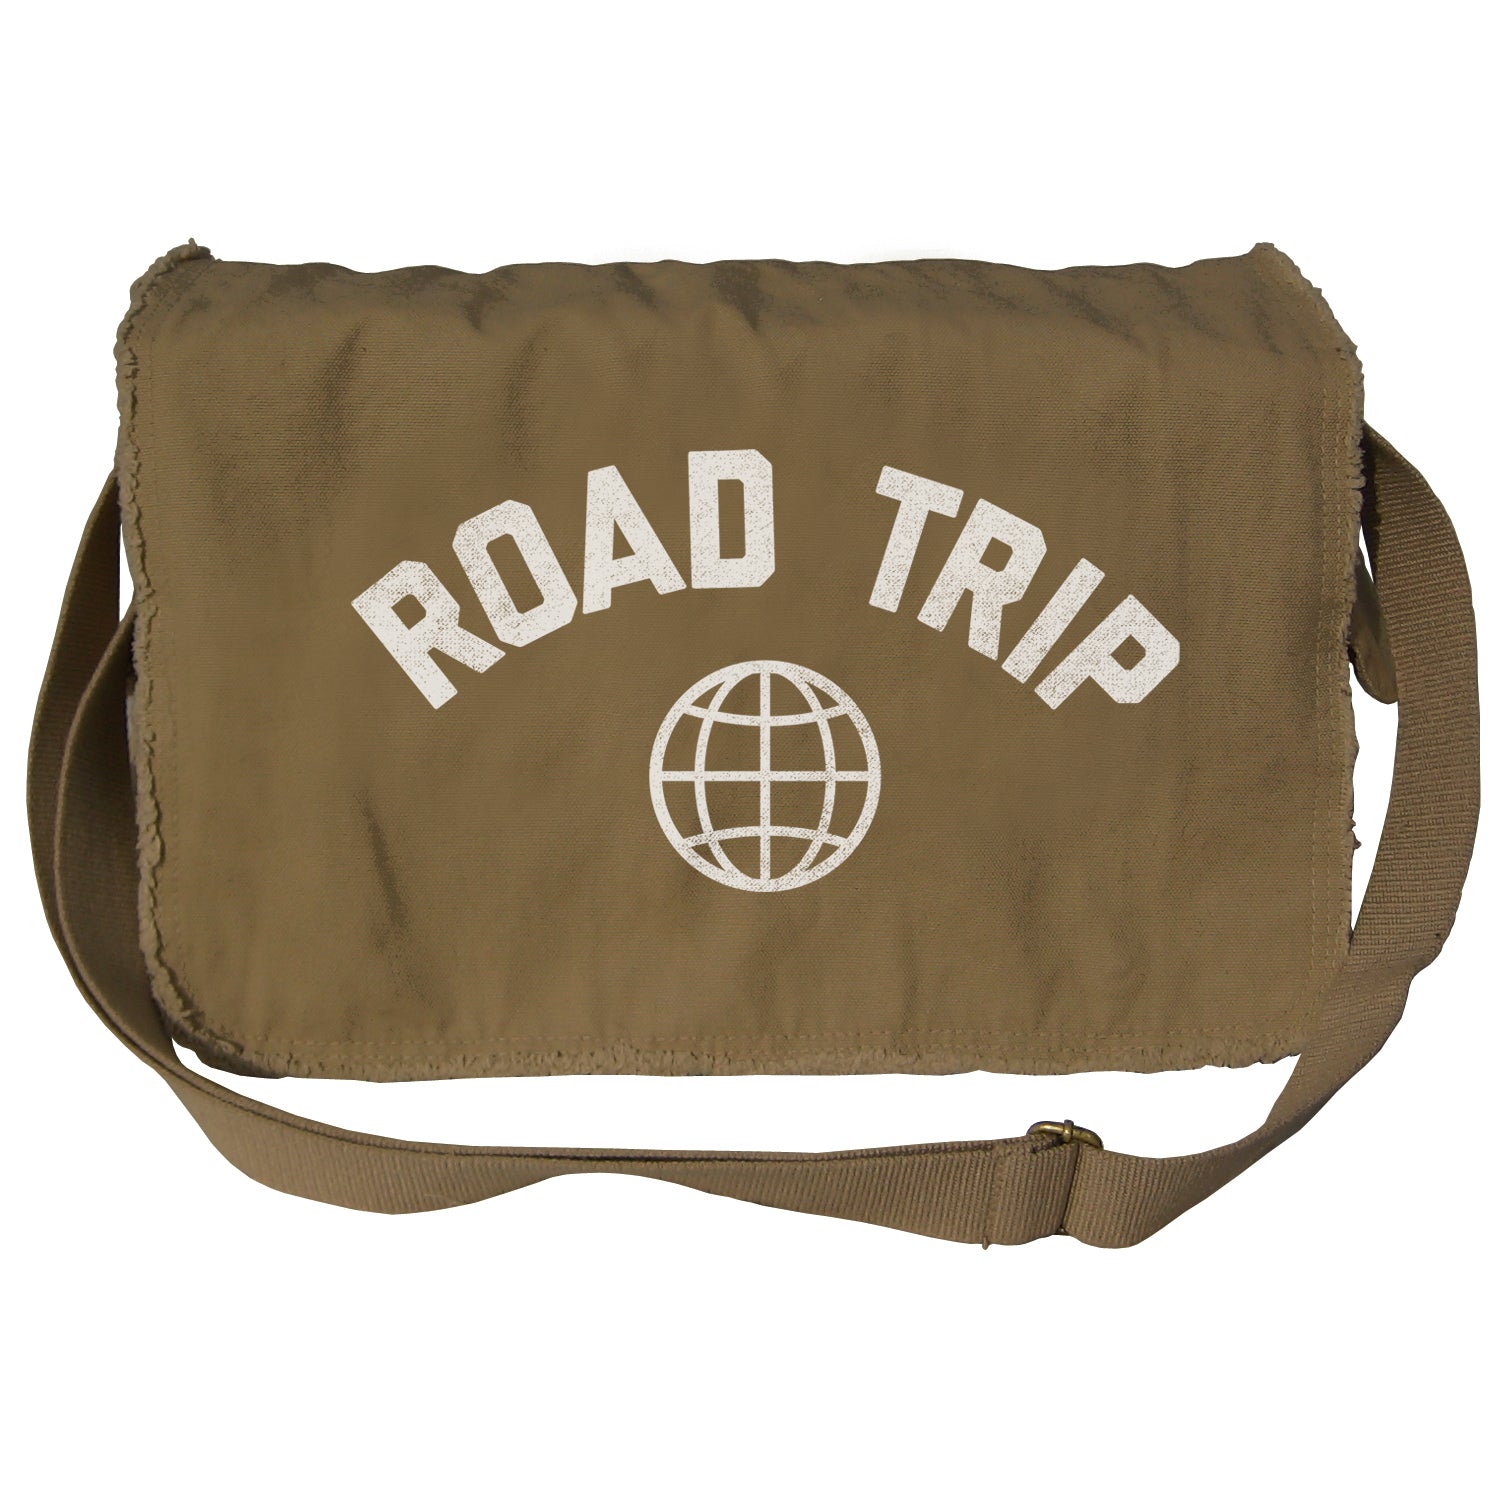 Road Trip Messenger Bag